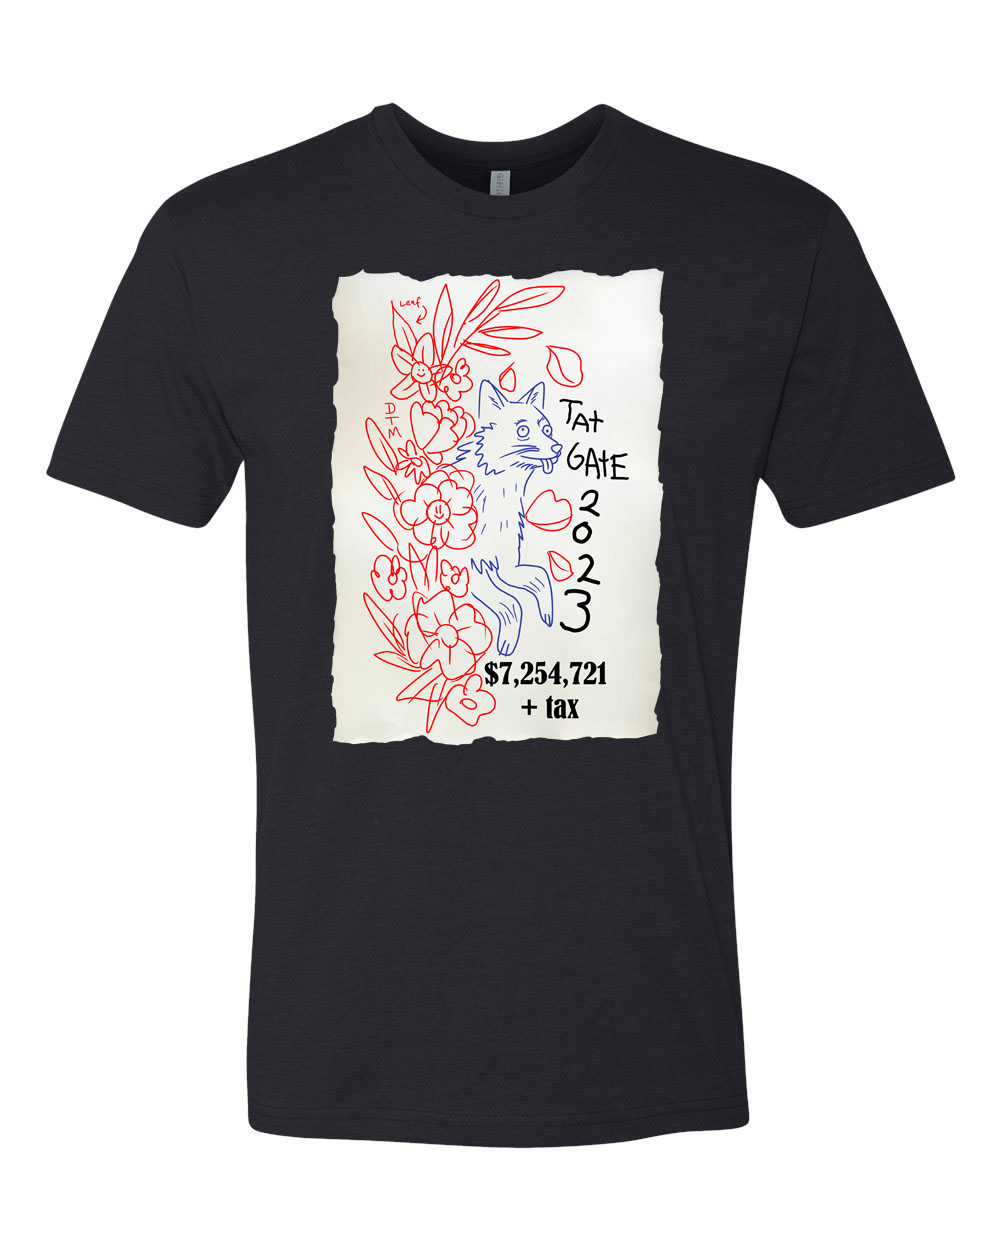 Danktattoomeme “Tat Gate 2023” Unisex T-Shirt